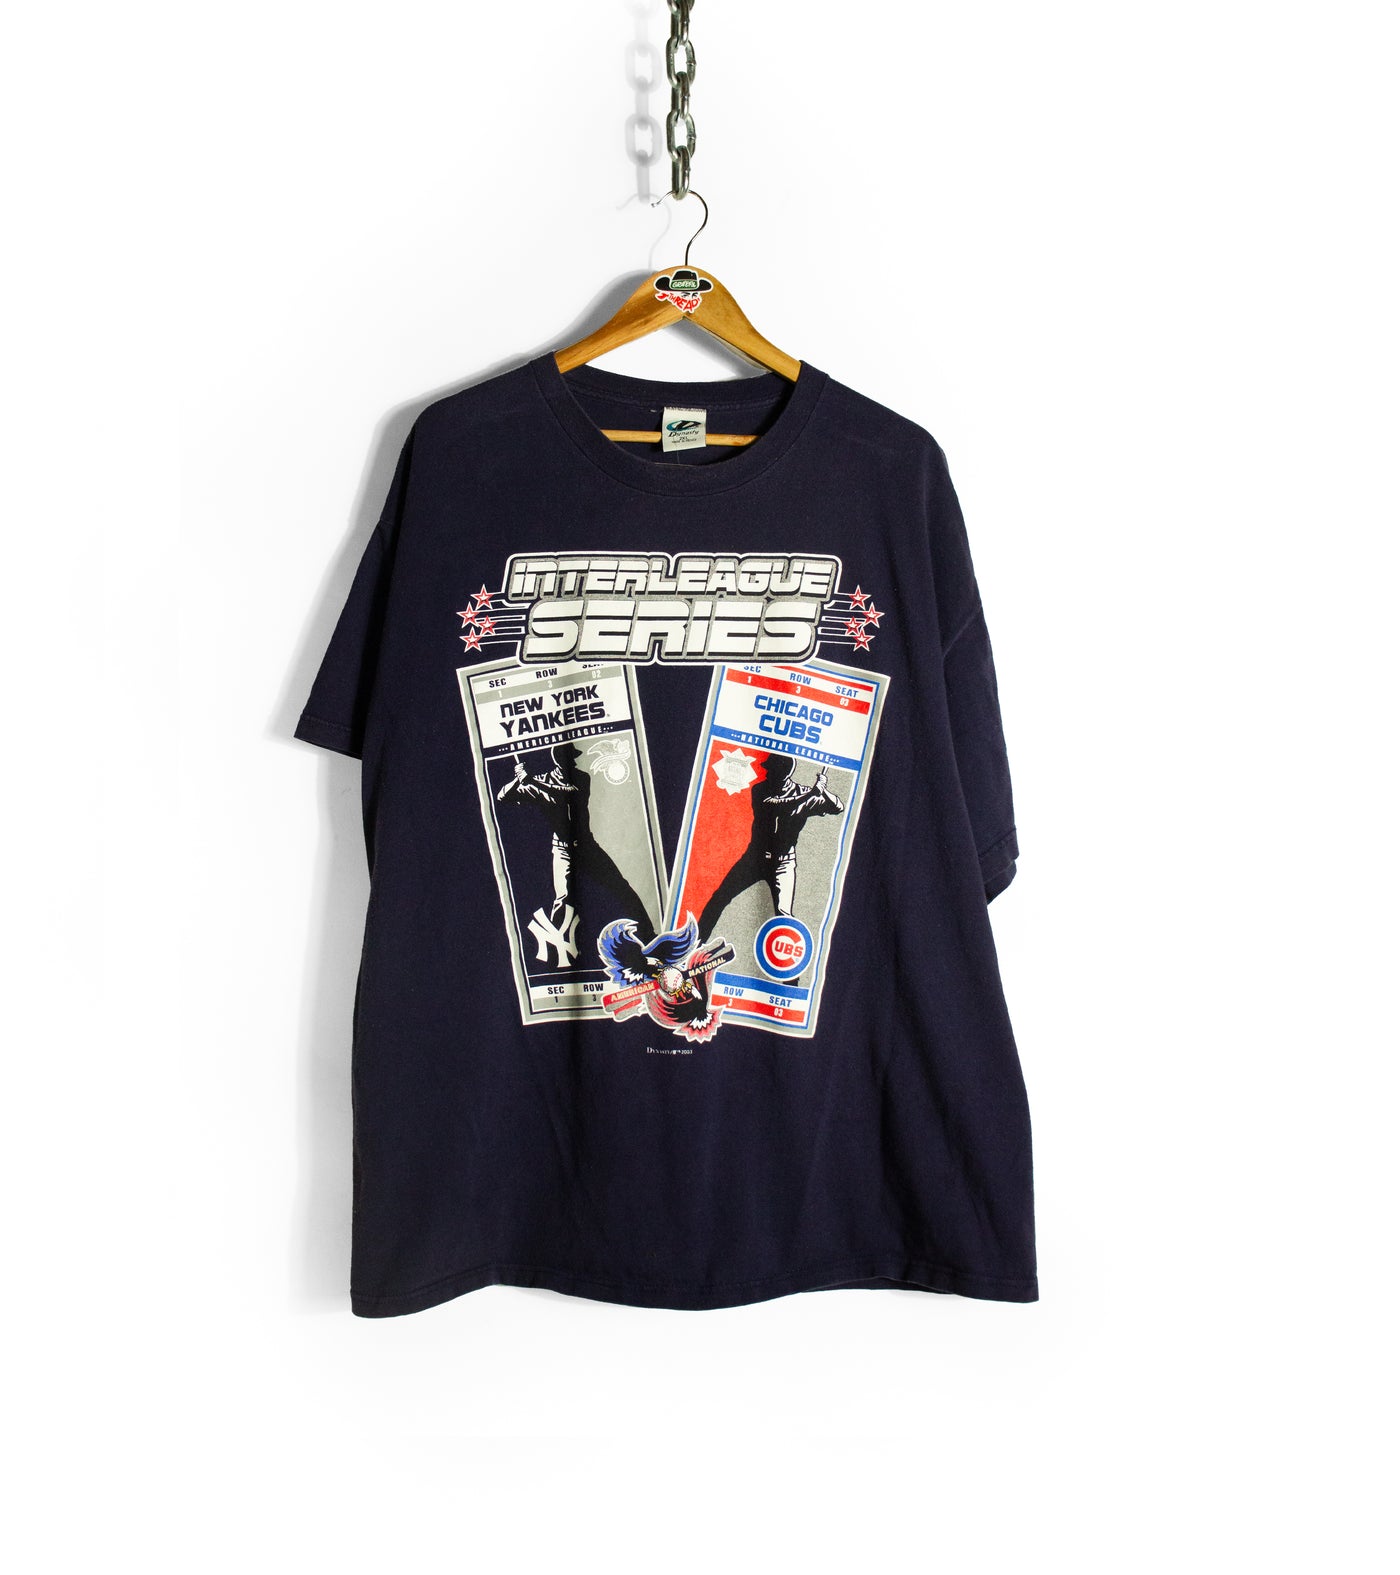 Vintage 2003 Inter-League Yankees-Cubs Series T-Shirt